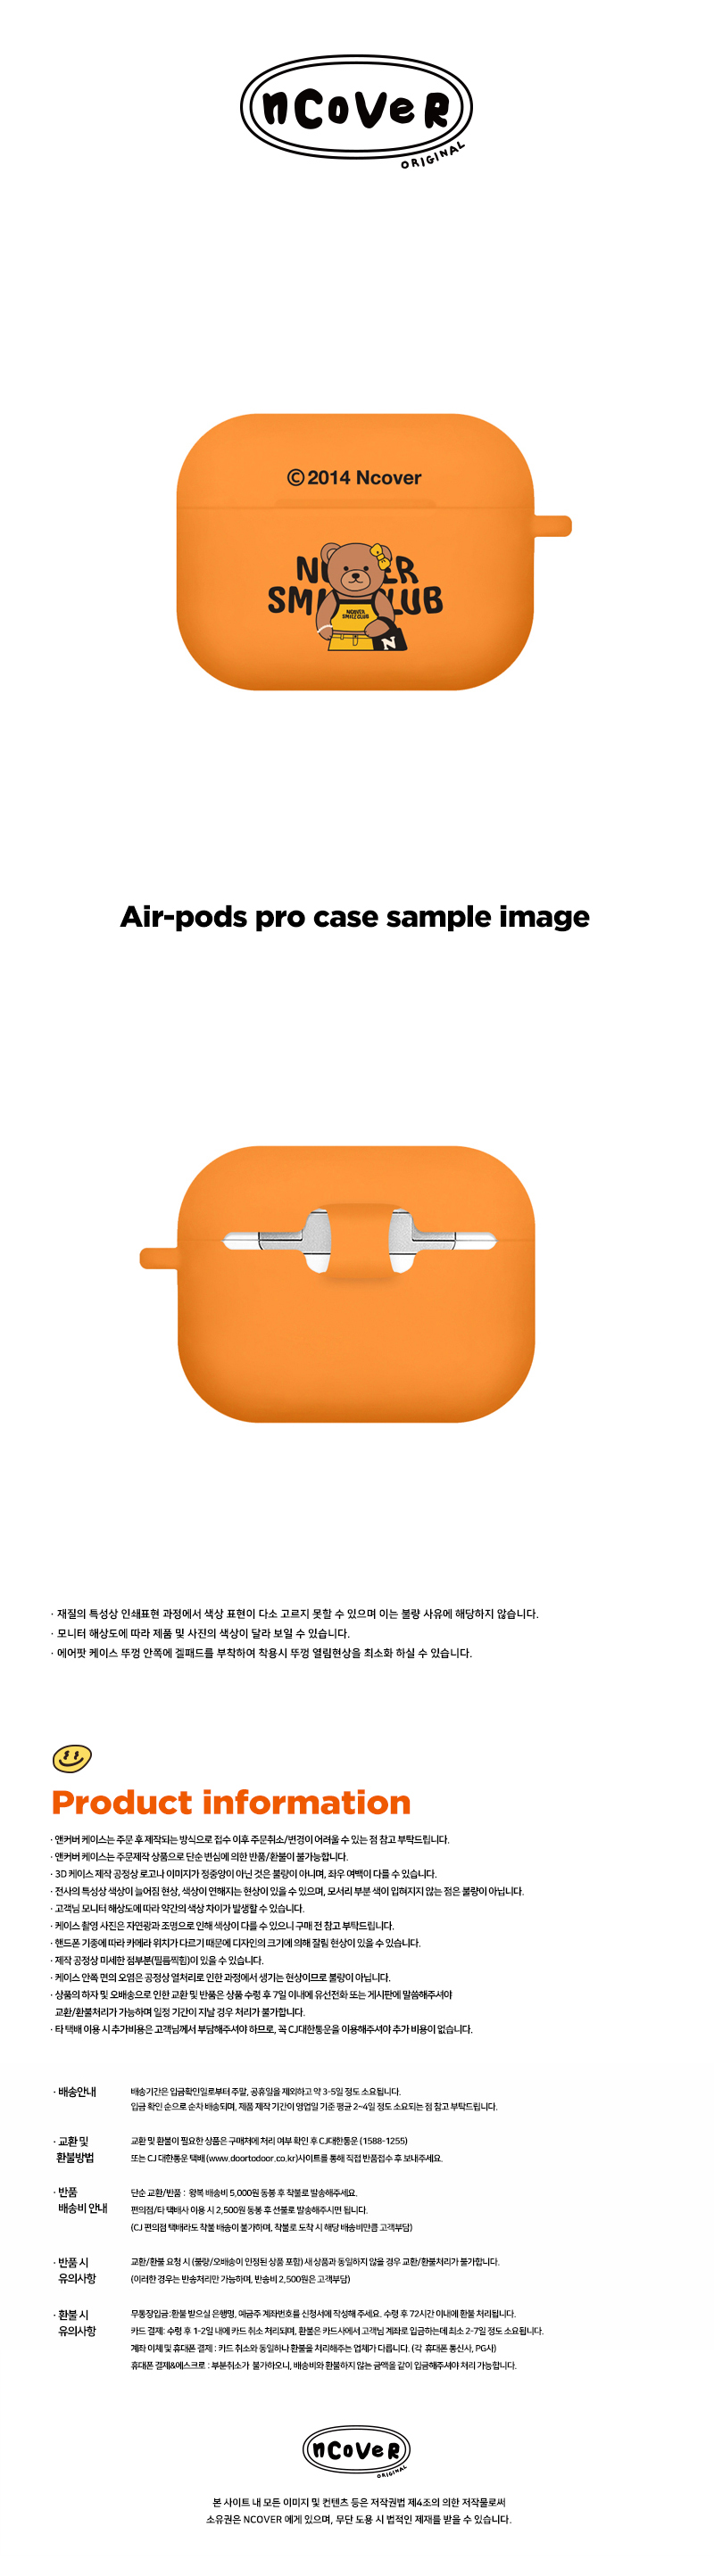  Handbag bruin-orange(airpods pro jelly)  15,000원 - 바이인터내셔널주식회사 디지털, 이어폰/헤드폰, 이어폰/헤드폰 액세서리, 에어팟/에어팟프로 케이스 바보사랑  Handbag bruin-orange(airpods pro jelly)  15,000원 - 바이인터내셔널주식회사 디지털, 이어폰/헤드폰, 이어폰/헤드폰 액세서리, 에어팟/에어팟프로 케이스 바보사랑